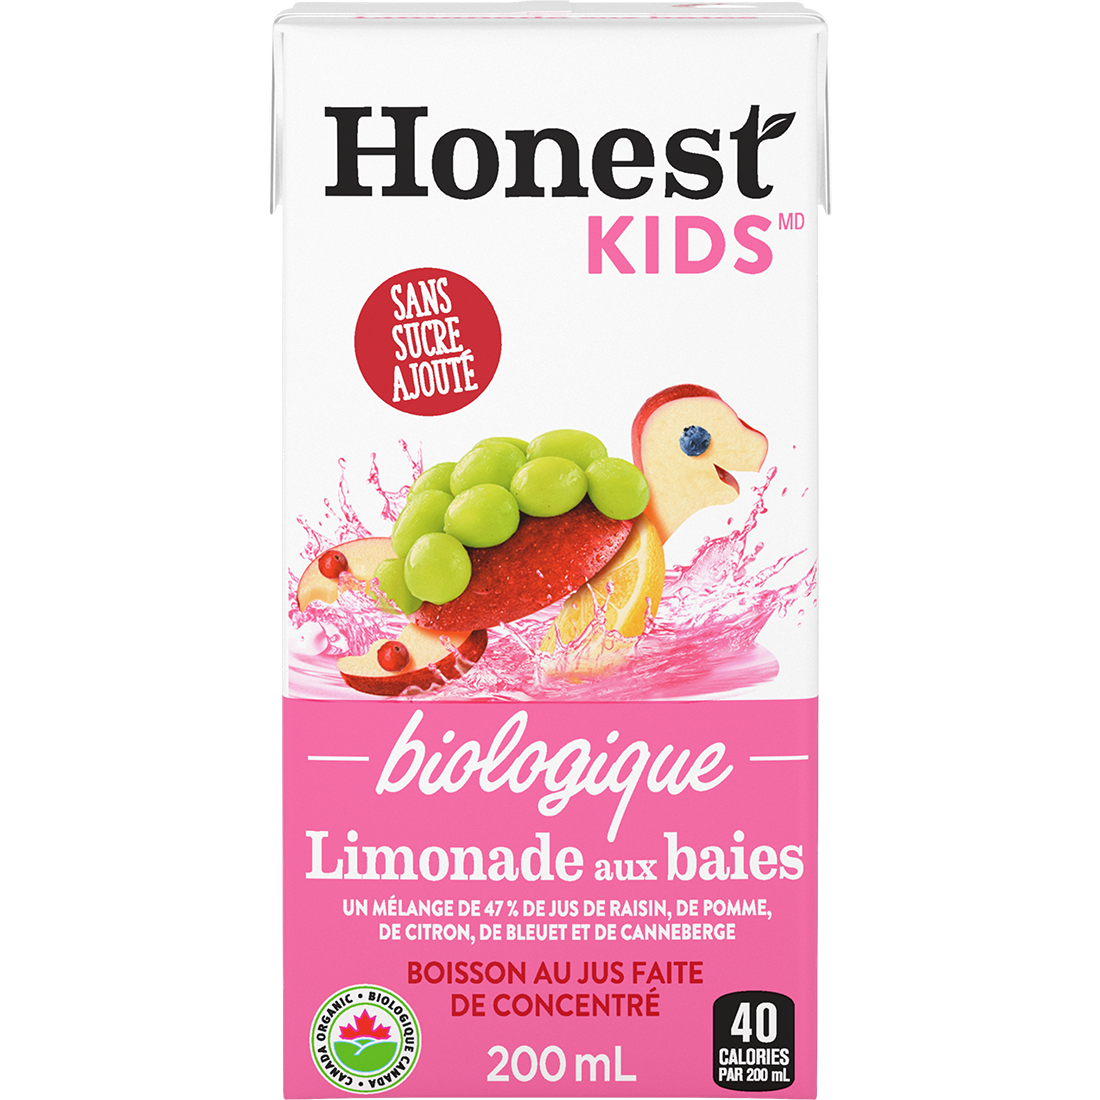 Honest Kids Limonade aux baies 200 mL emballage